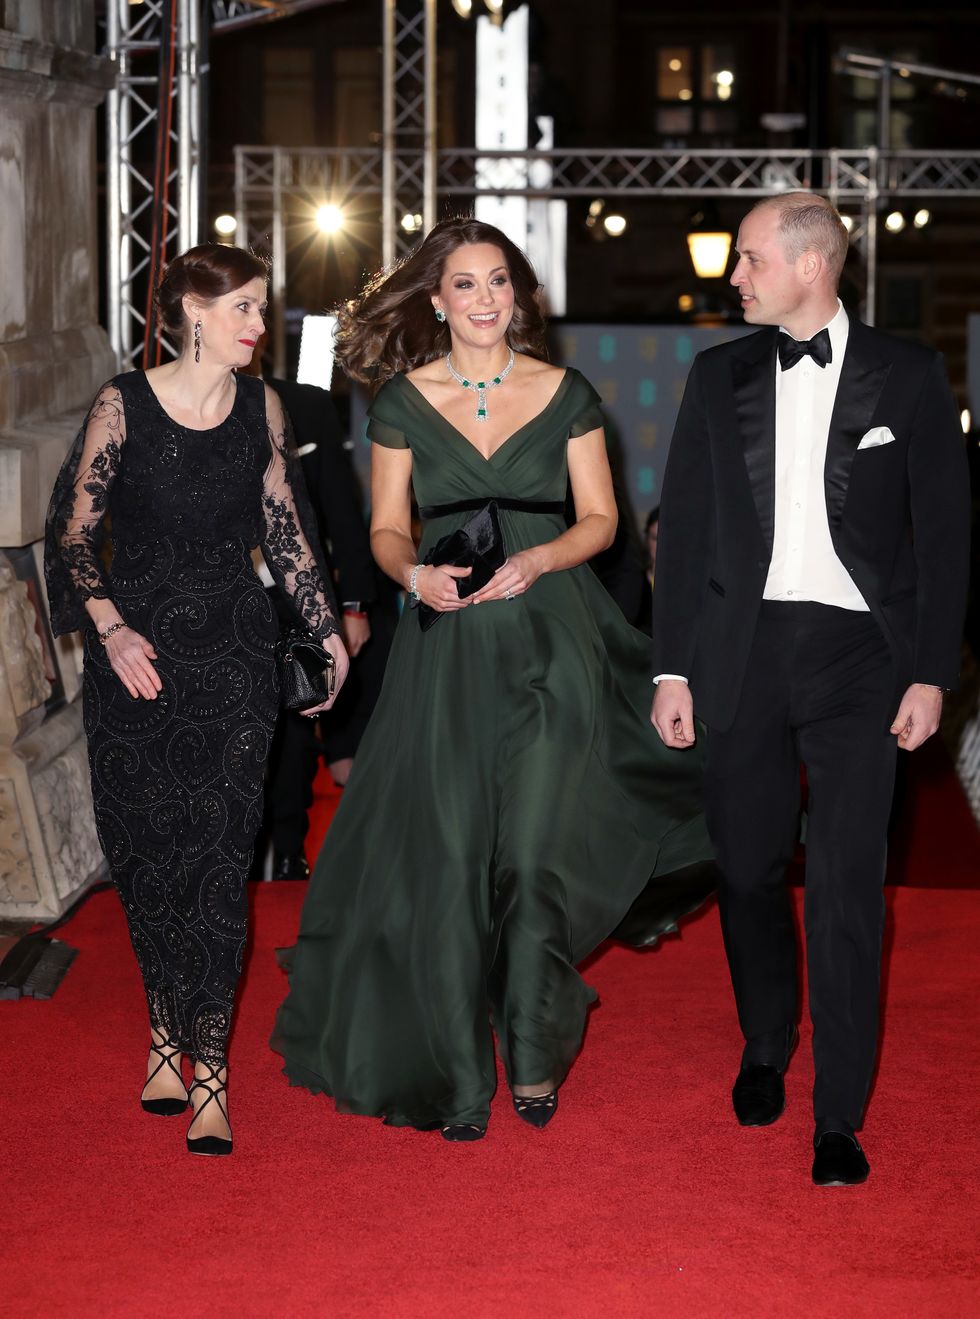 BAFTAs red carpet 2018